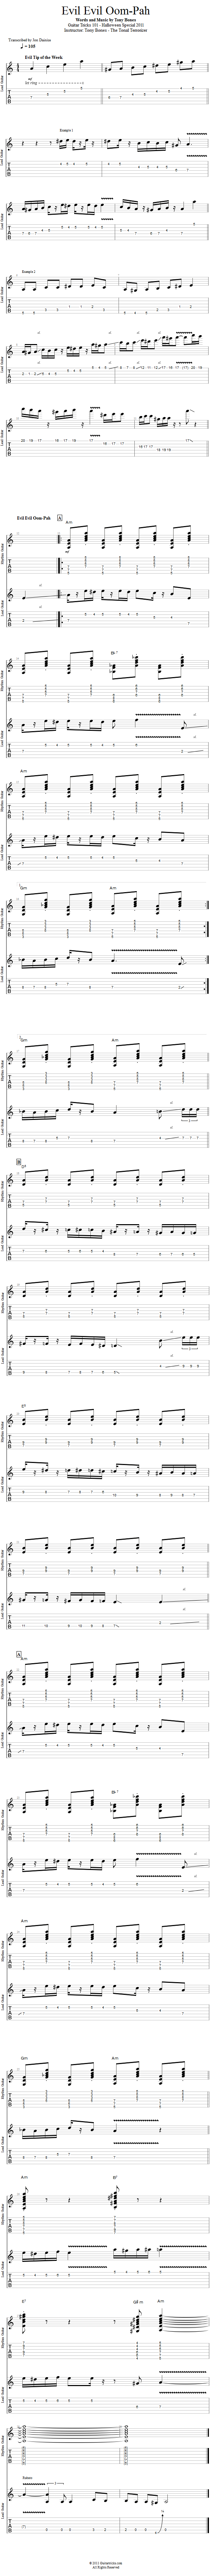 Guitar Tricks 101 - Halloween Special 2011 song notation